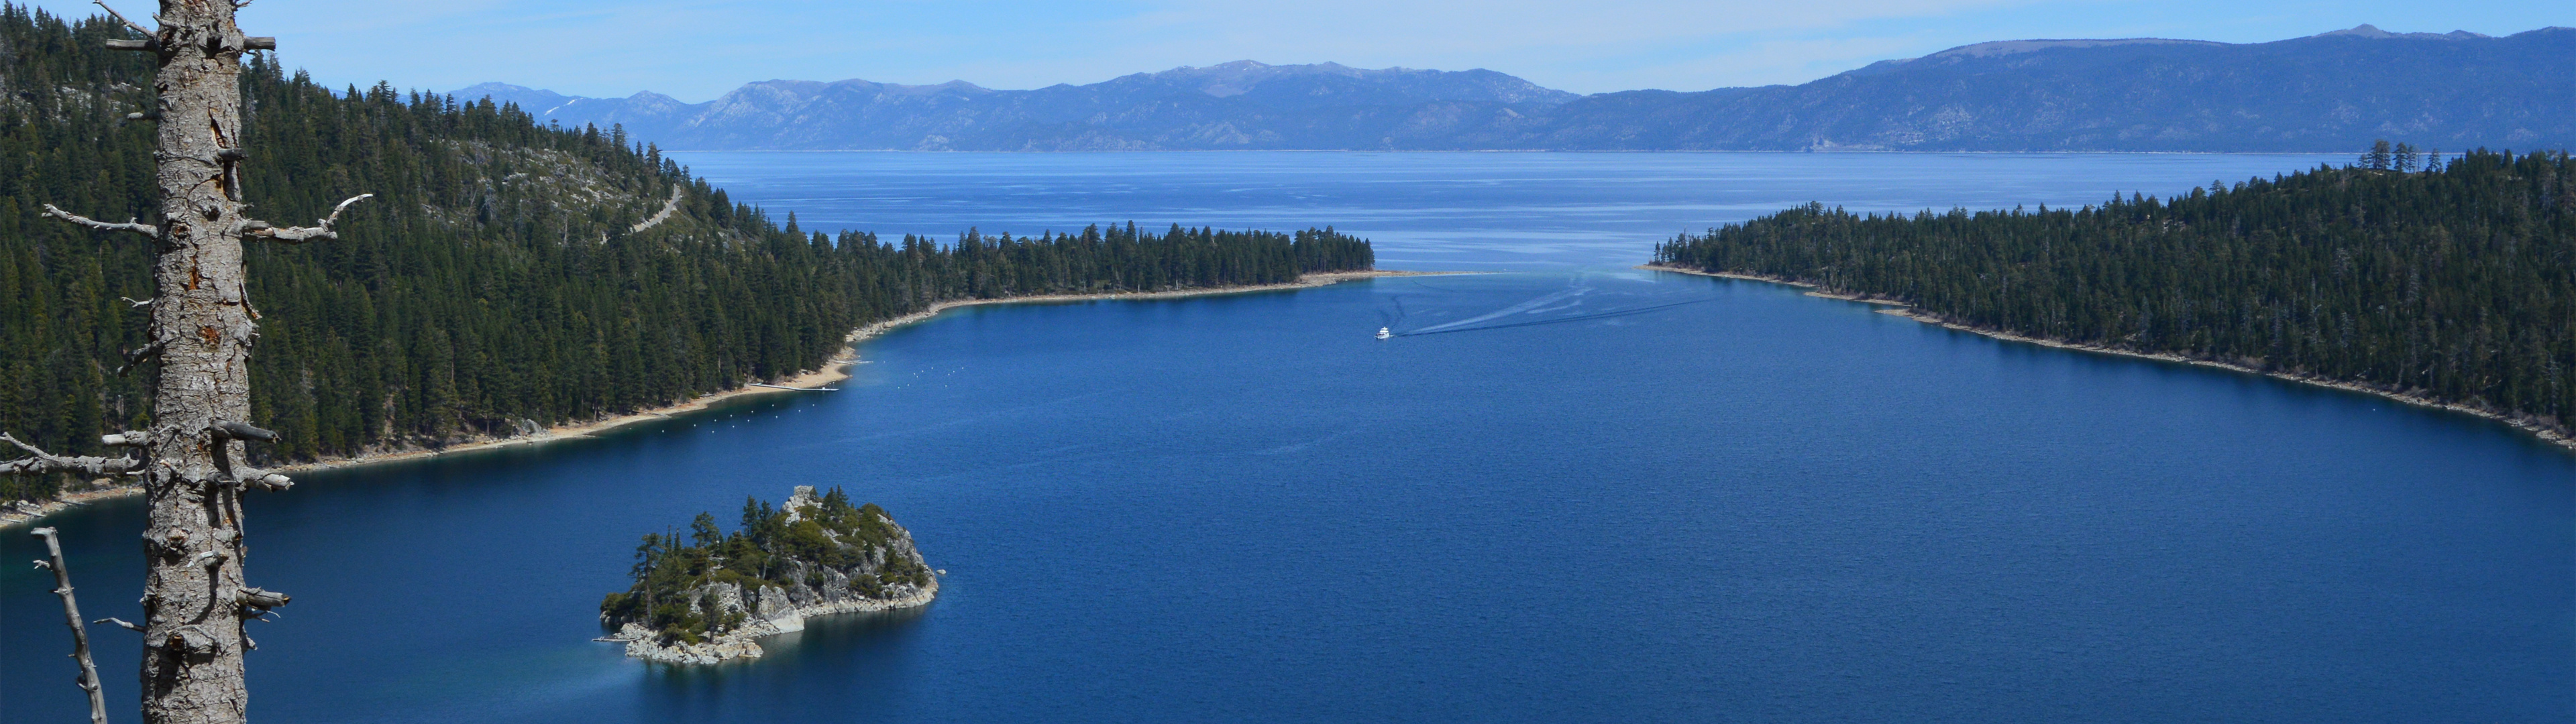 Lake Tahoe, Emerald Bay, Climber07, Desktop, Mobile, Tablet, 3840x1080 Dual Screen Desktop